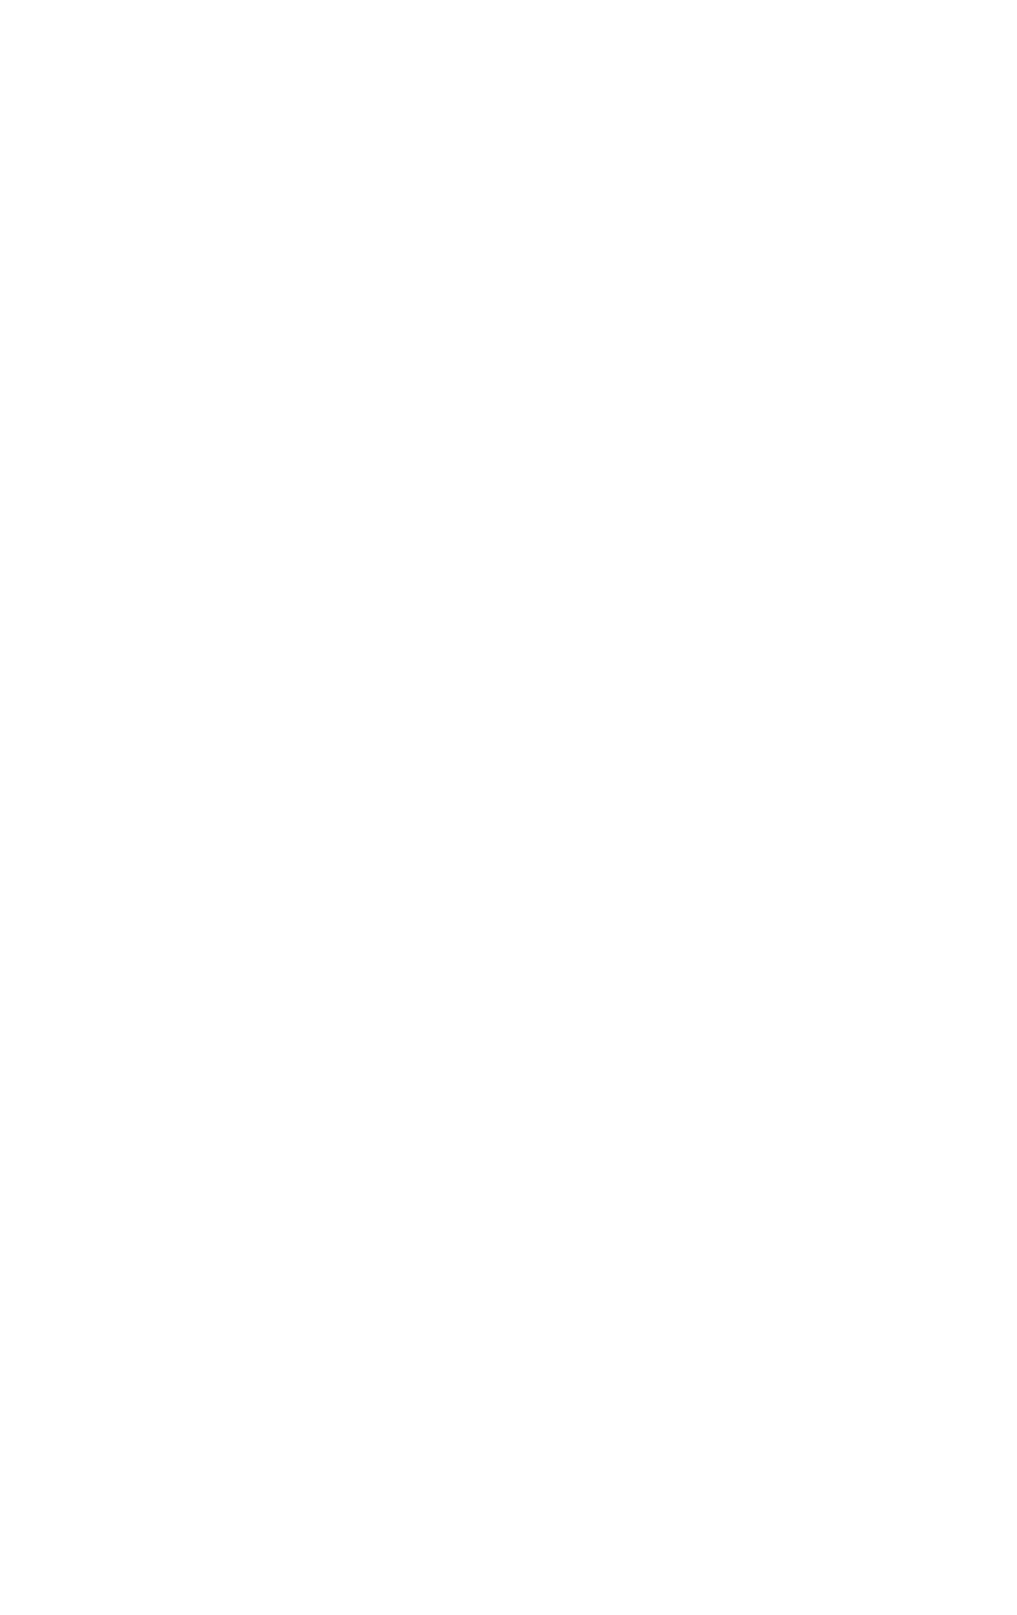 Prometheus Biosciences logo for dark backgrounds (transparent PNG)